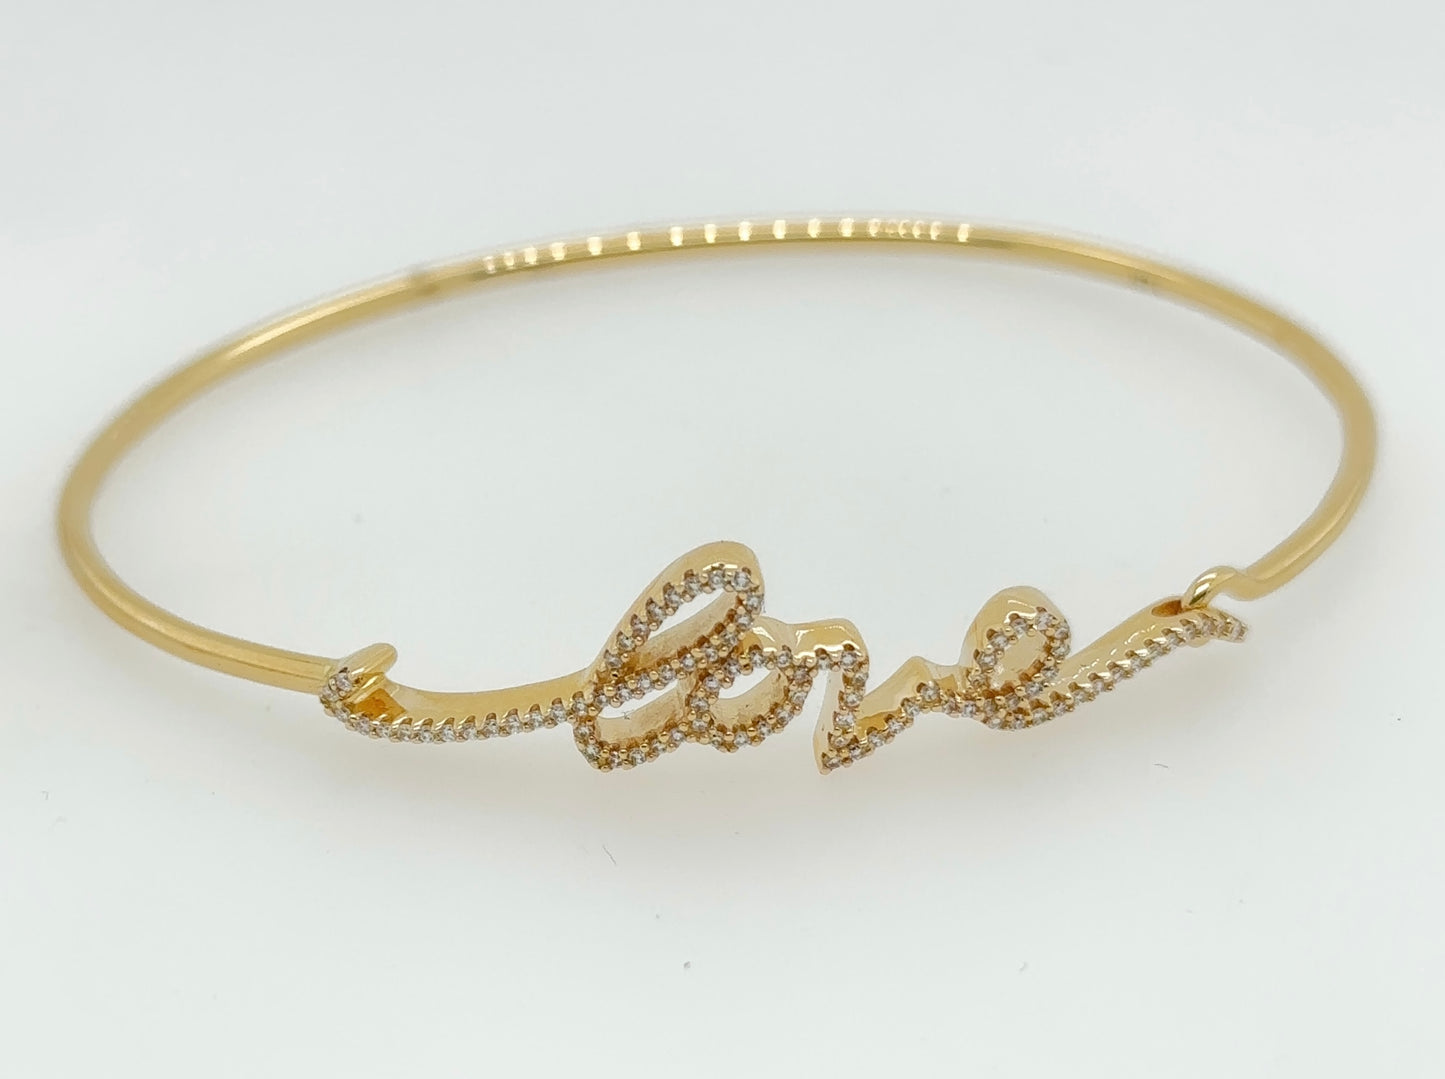 Cursive Love Bracelet